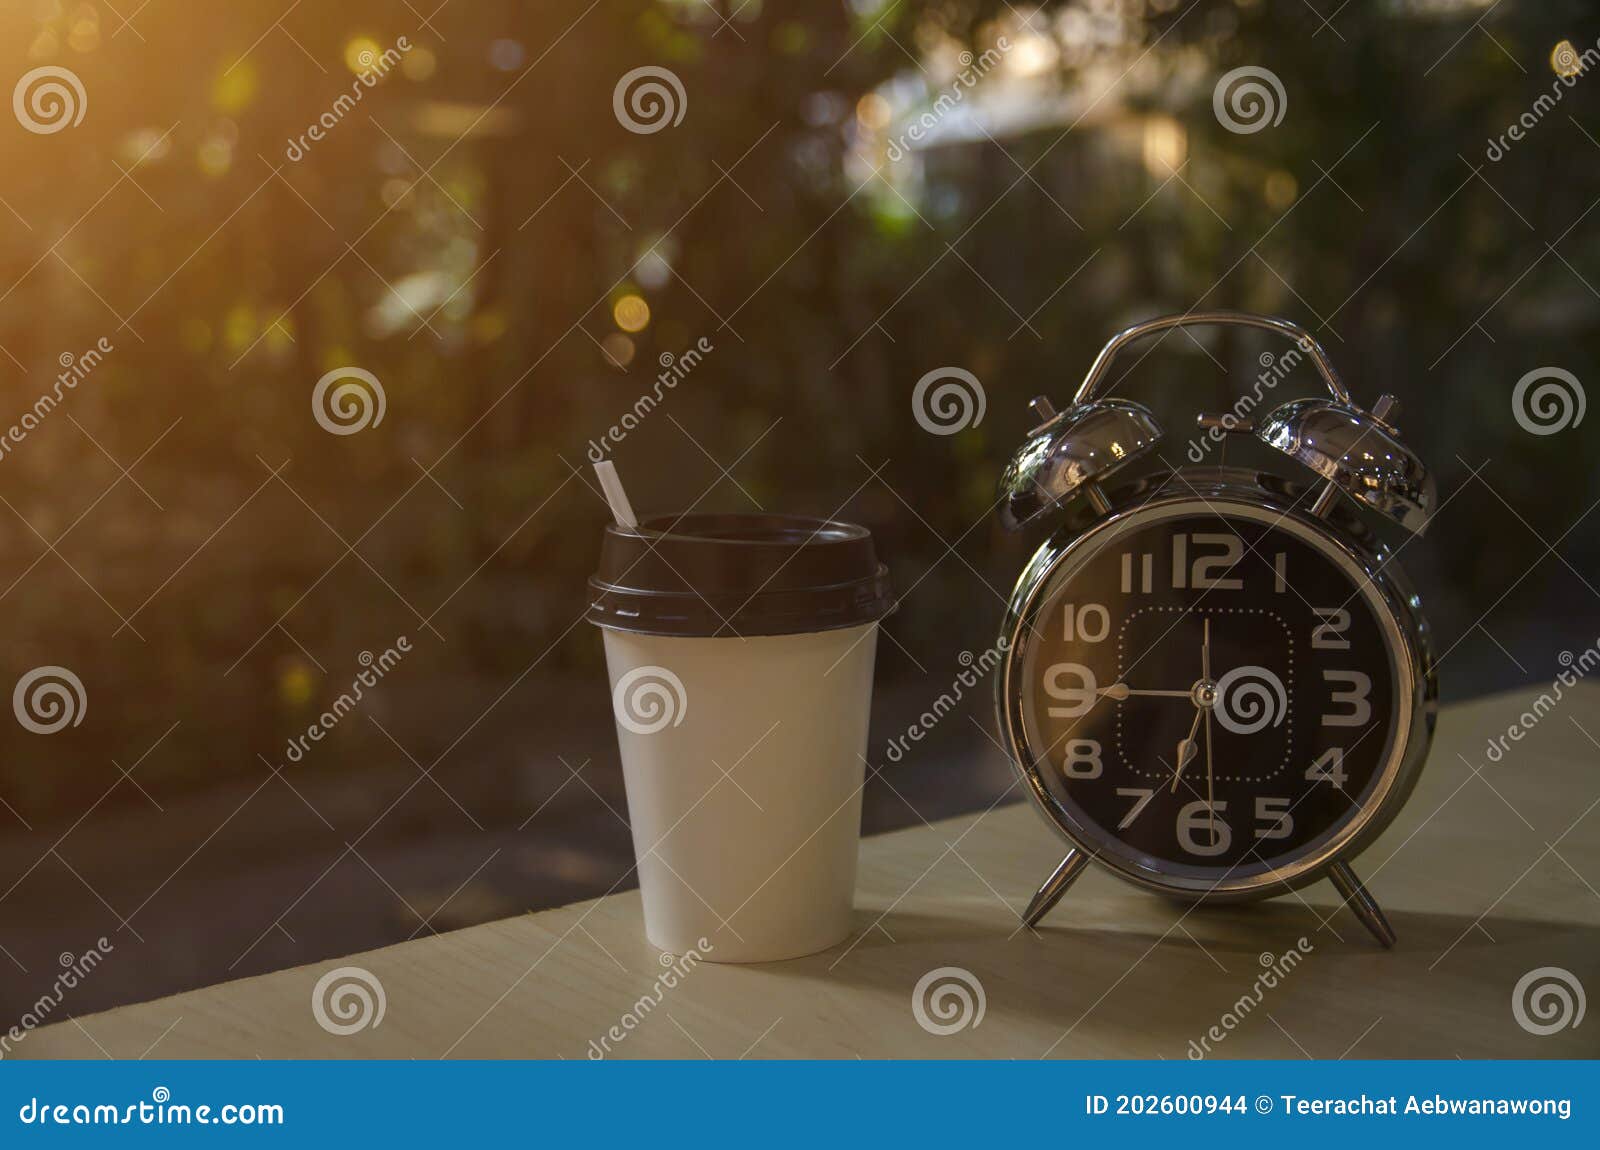 9 of the best coffee maker alarm clocks